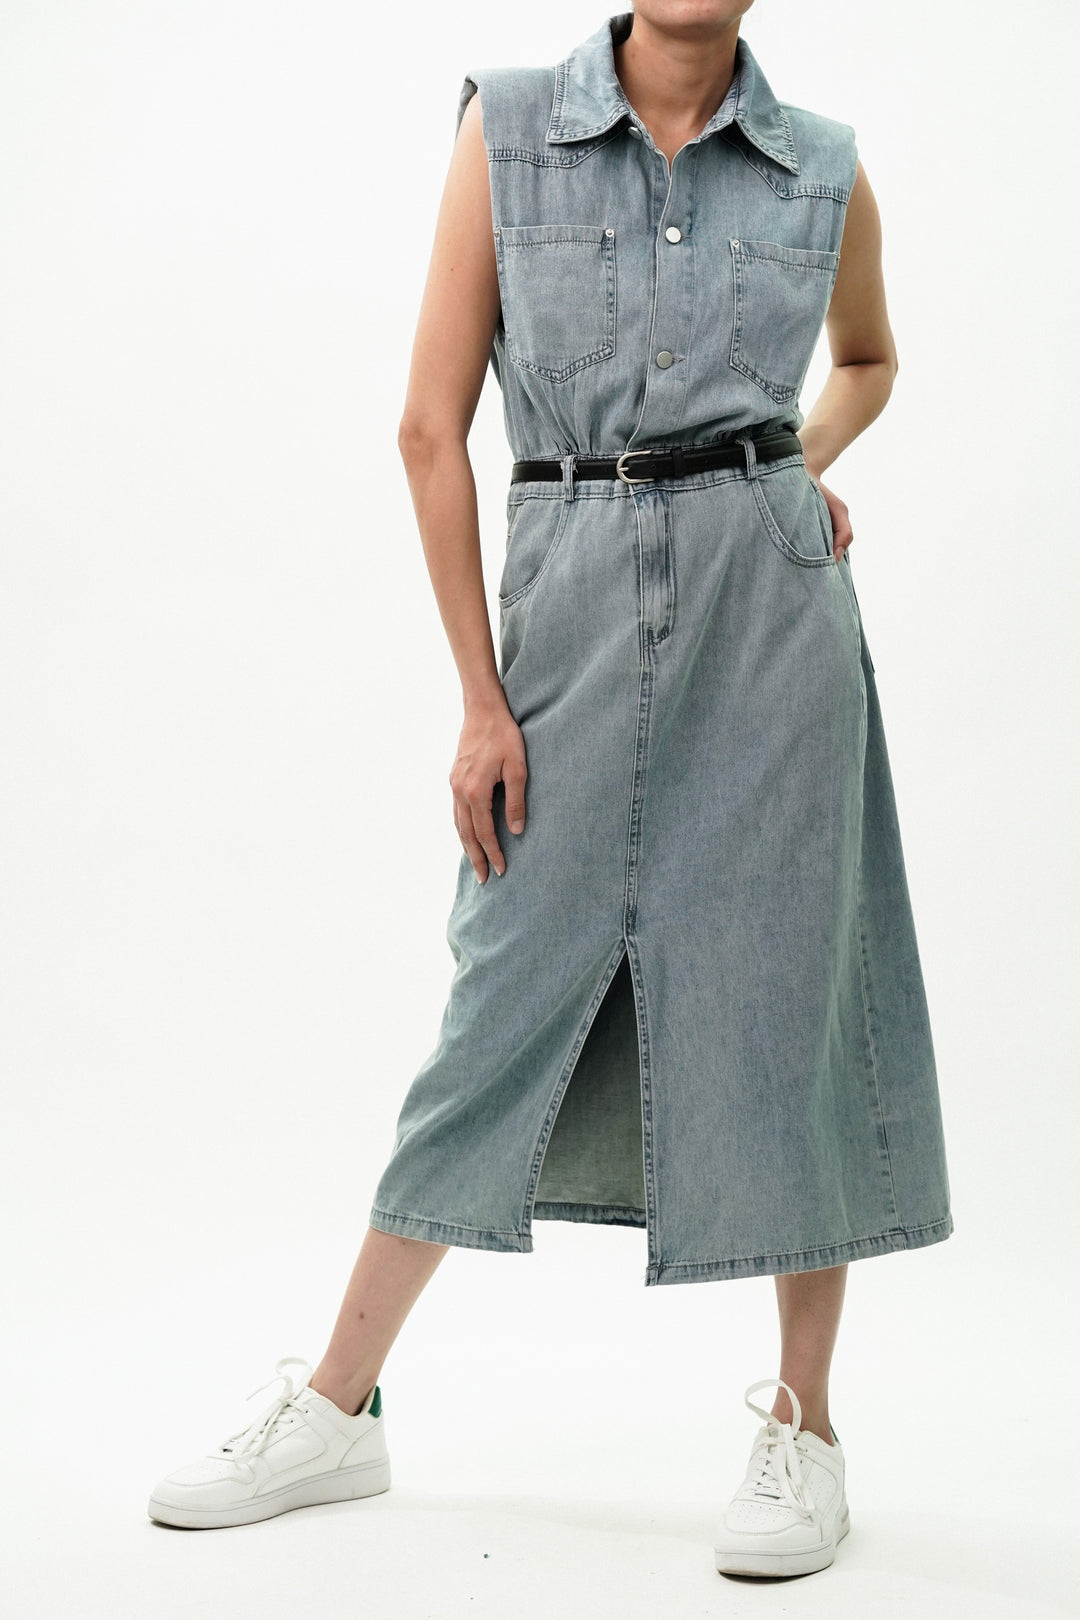 Sleeveless denim dress with pockets and belt